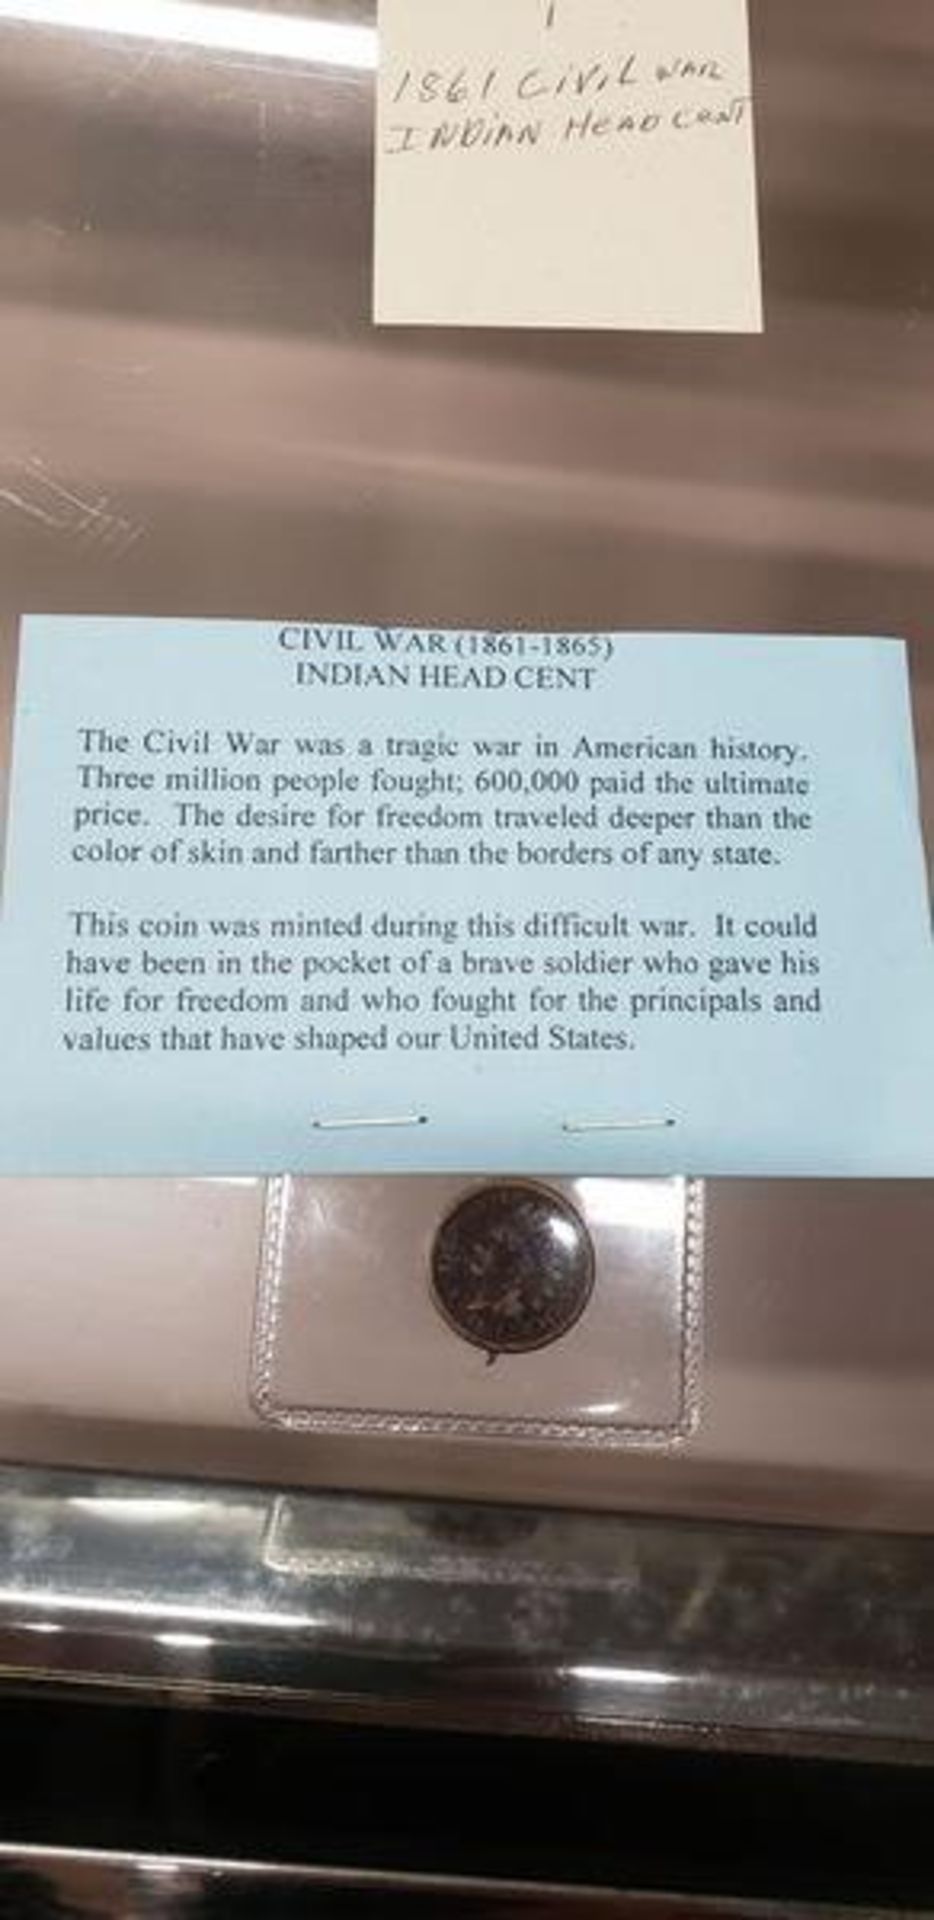 1861 CIVIL WAR INDIAN HEAD CENT